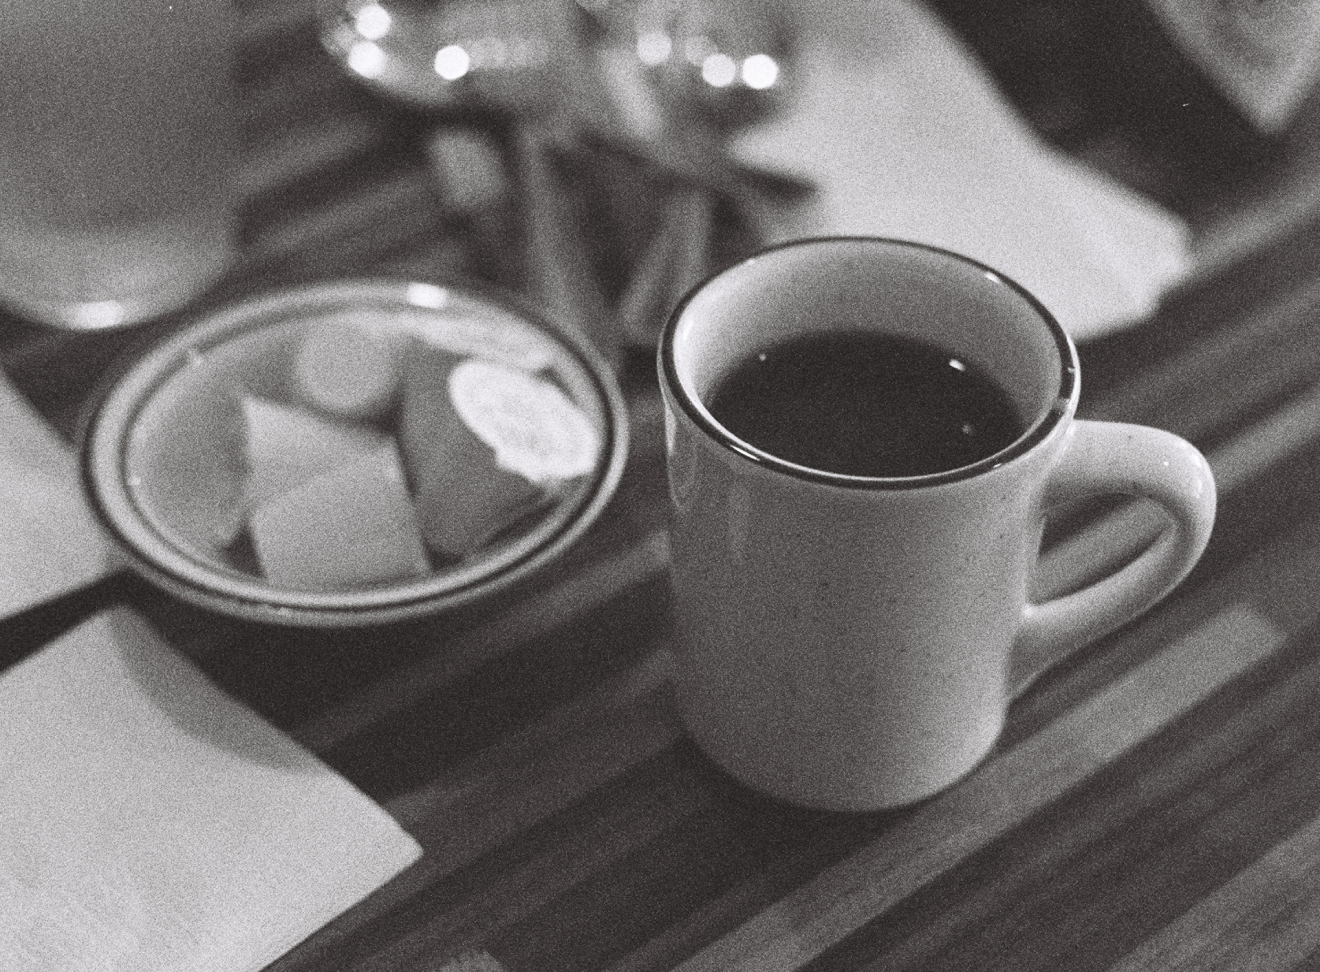 Coffee at Norms on La Cienega. Photograph by Jordan Romanoff